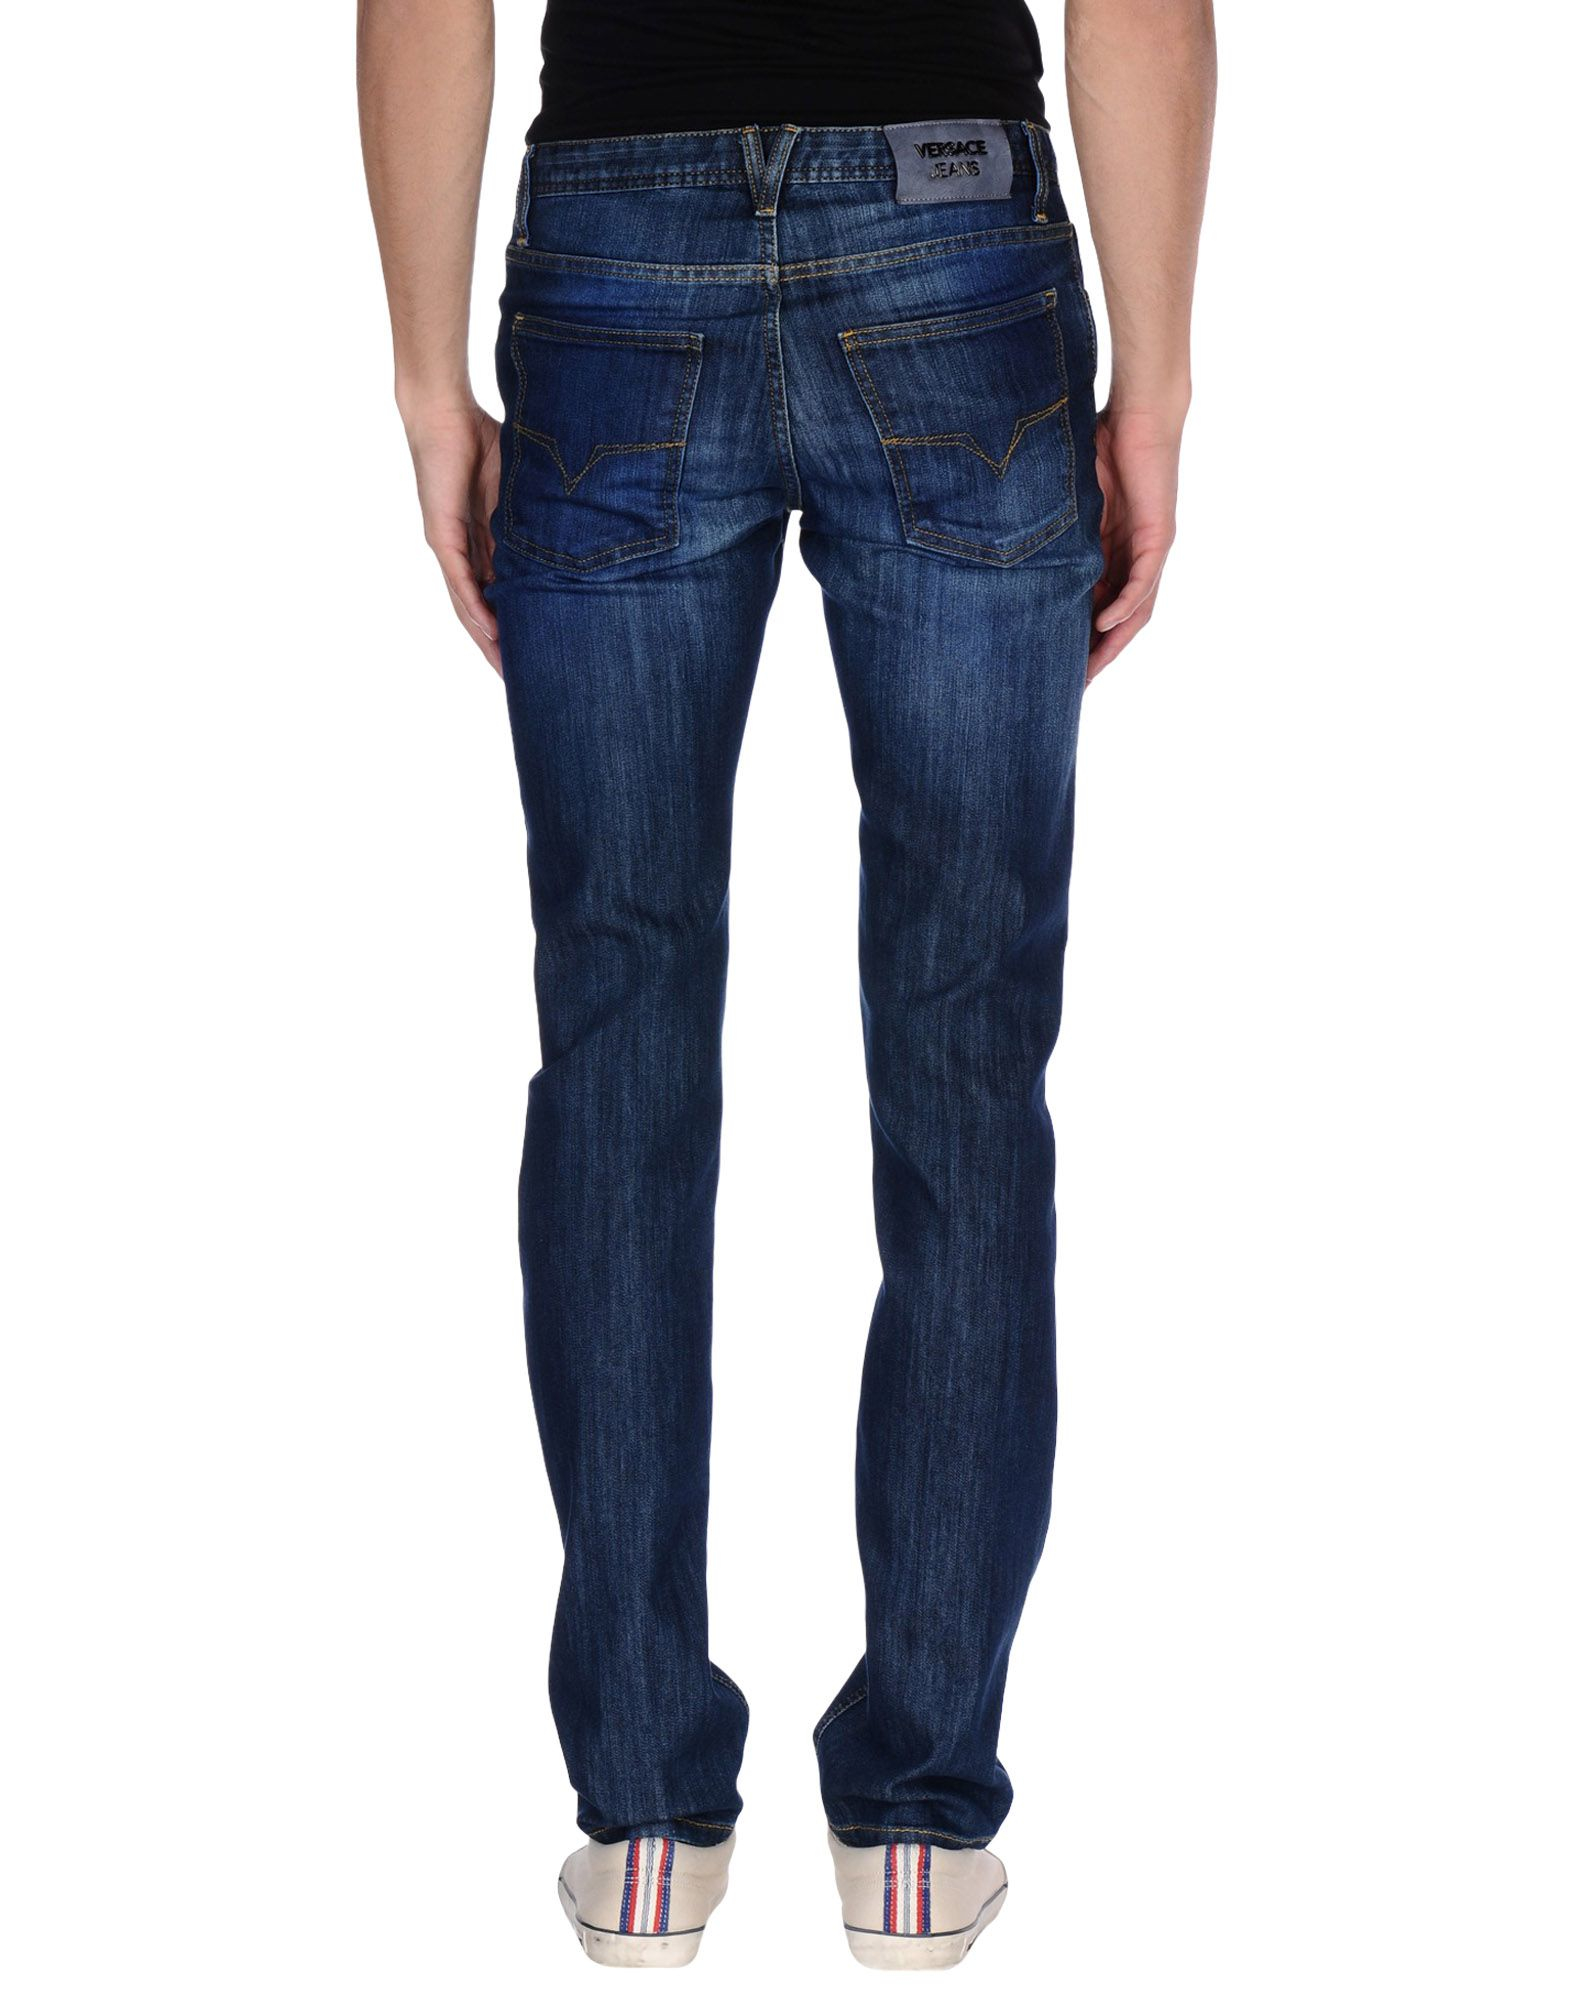 Lyst - Versace Jeans Denim Trousers in Blue for Men